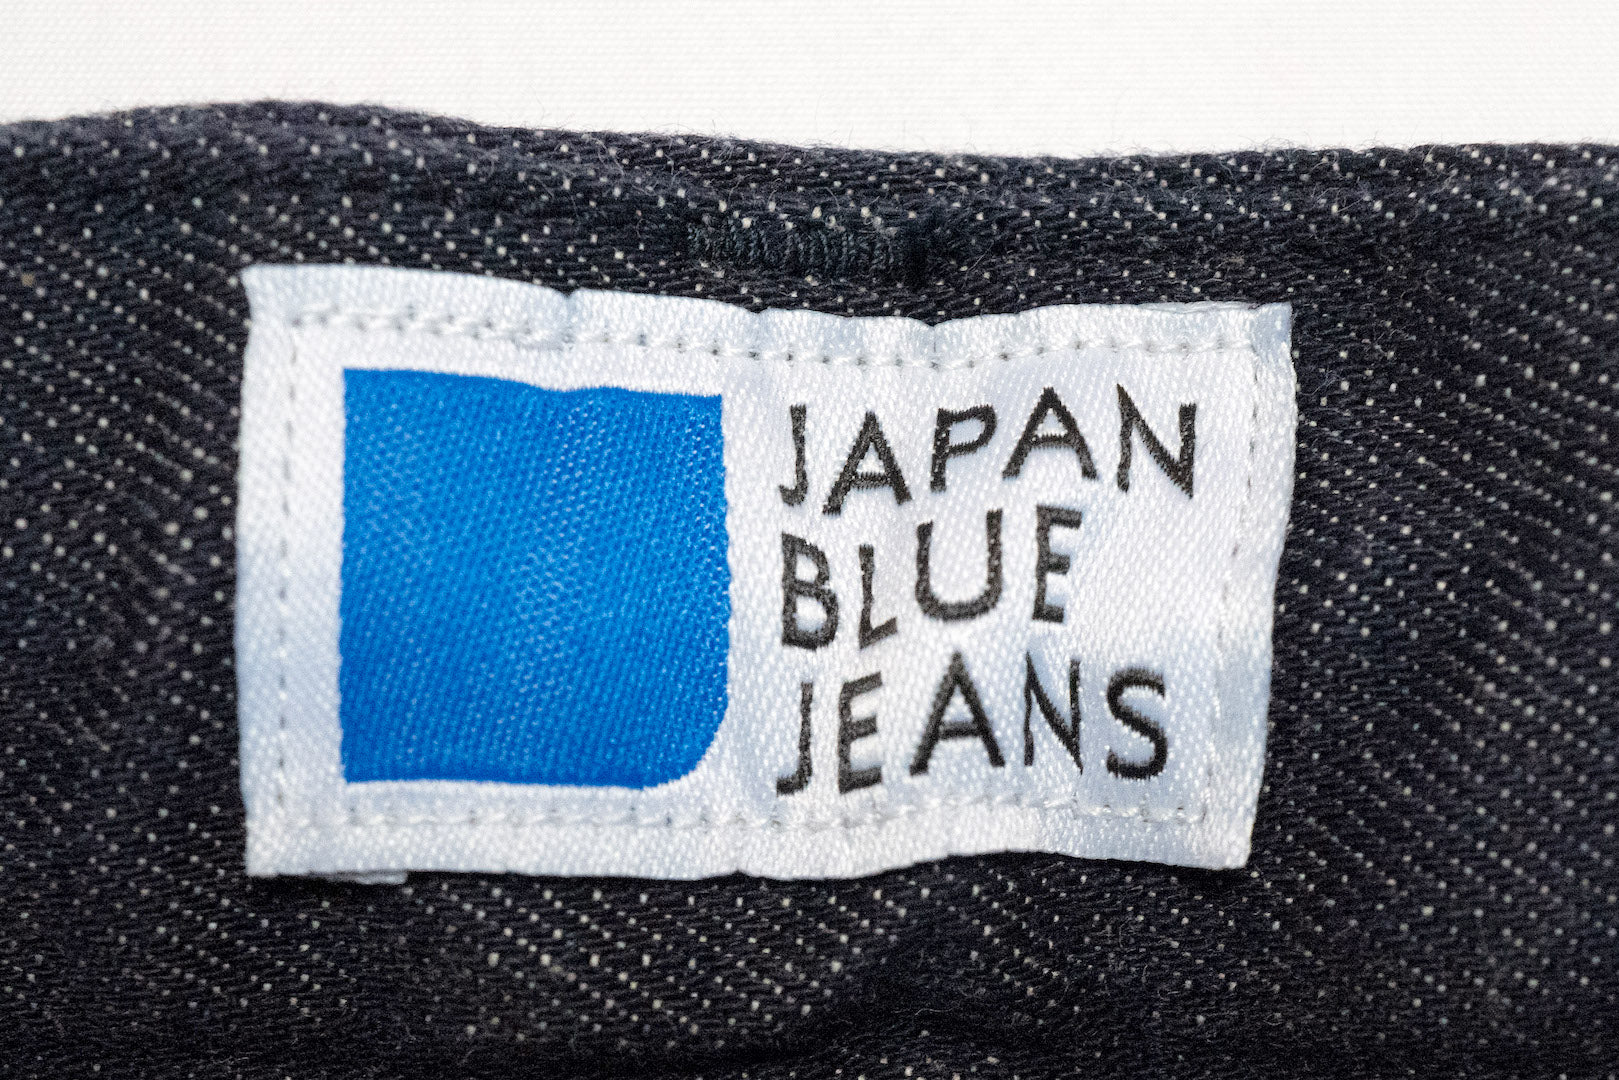 Japan Blue 10oz "Shin" Denim Easy Pants (Grand Indigo)